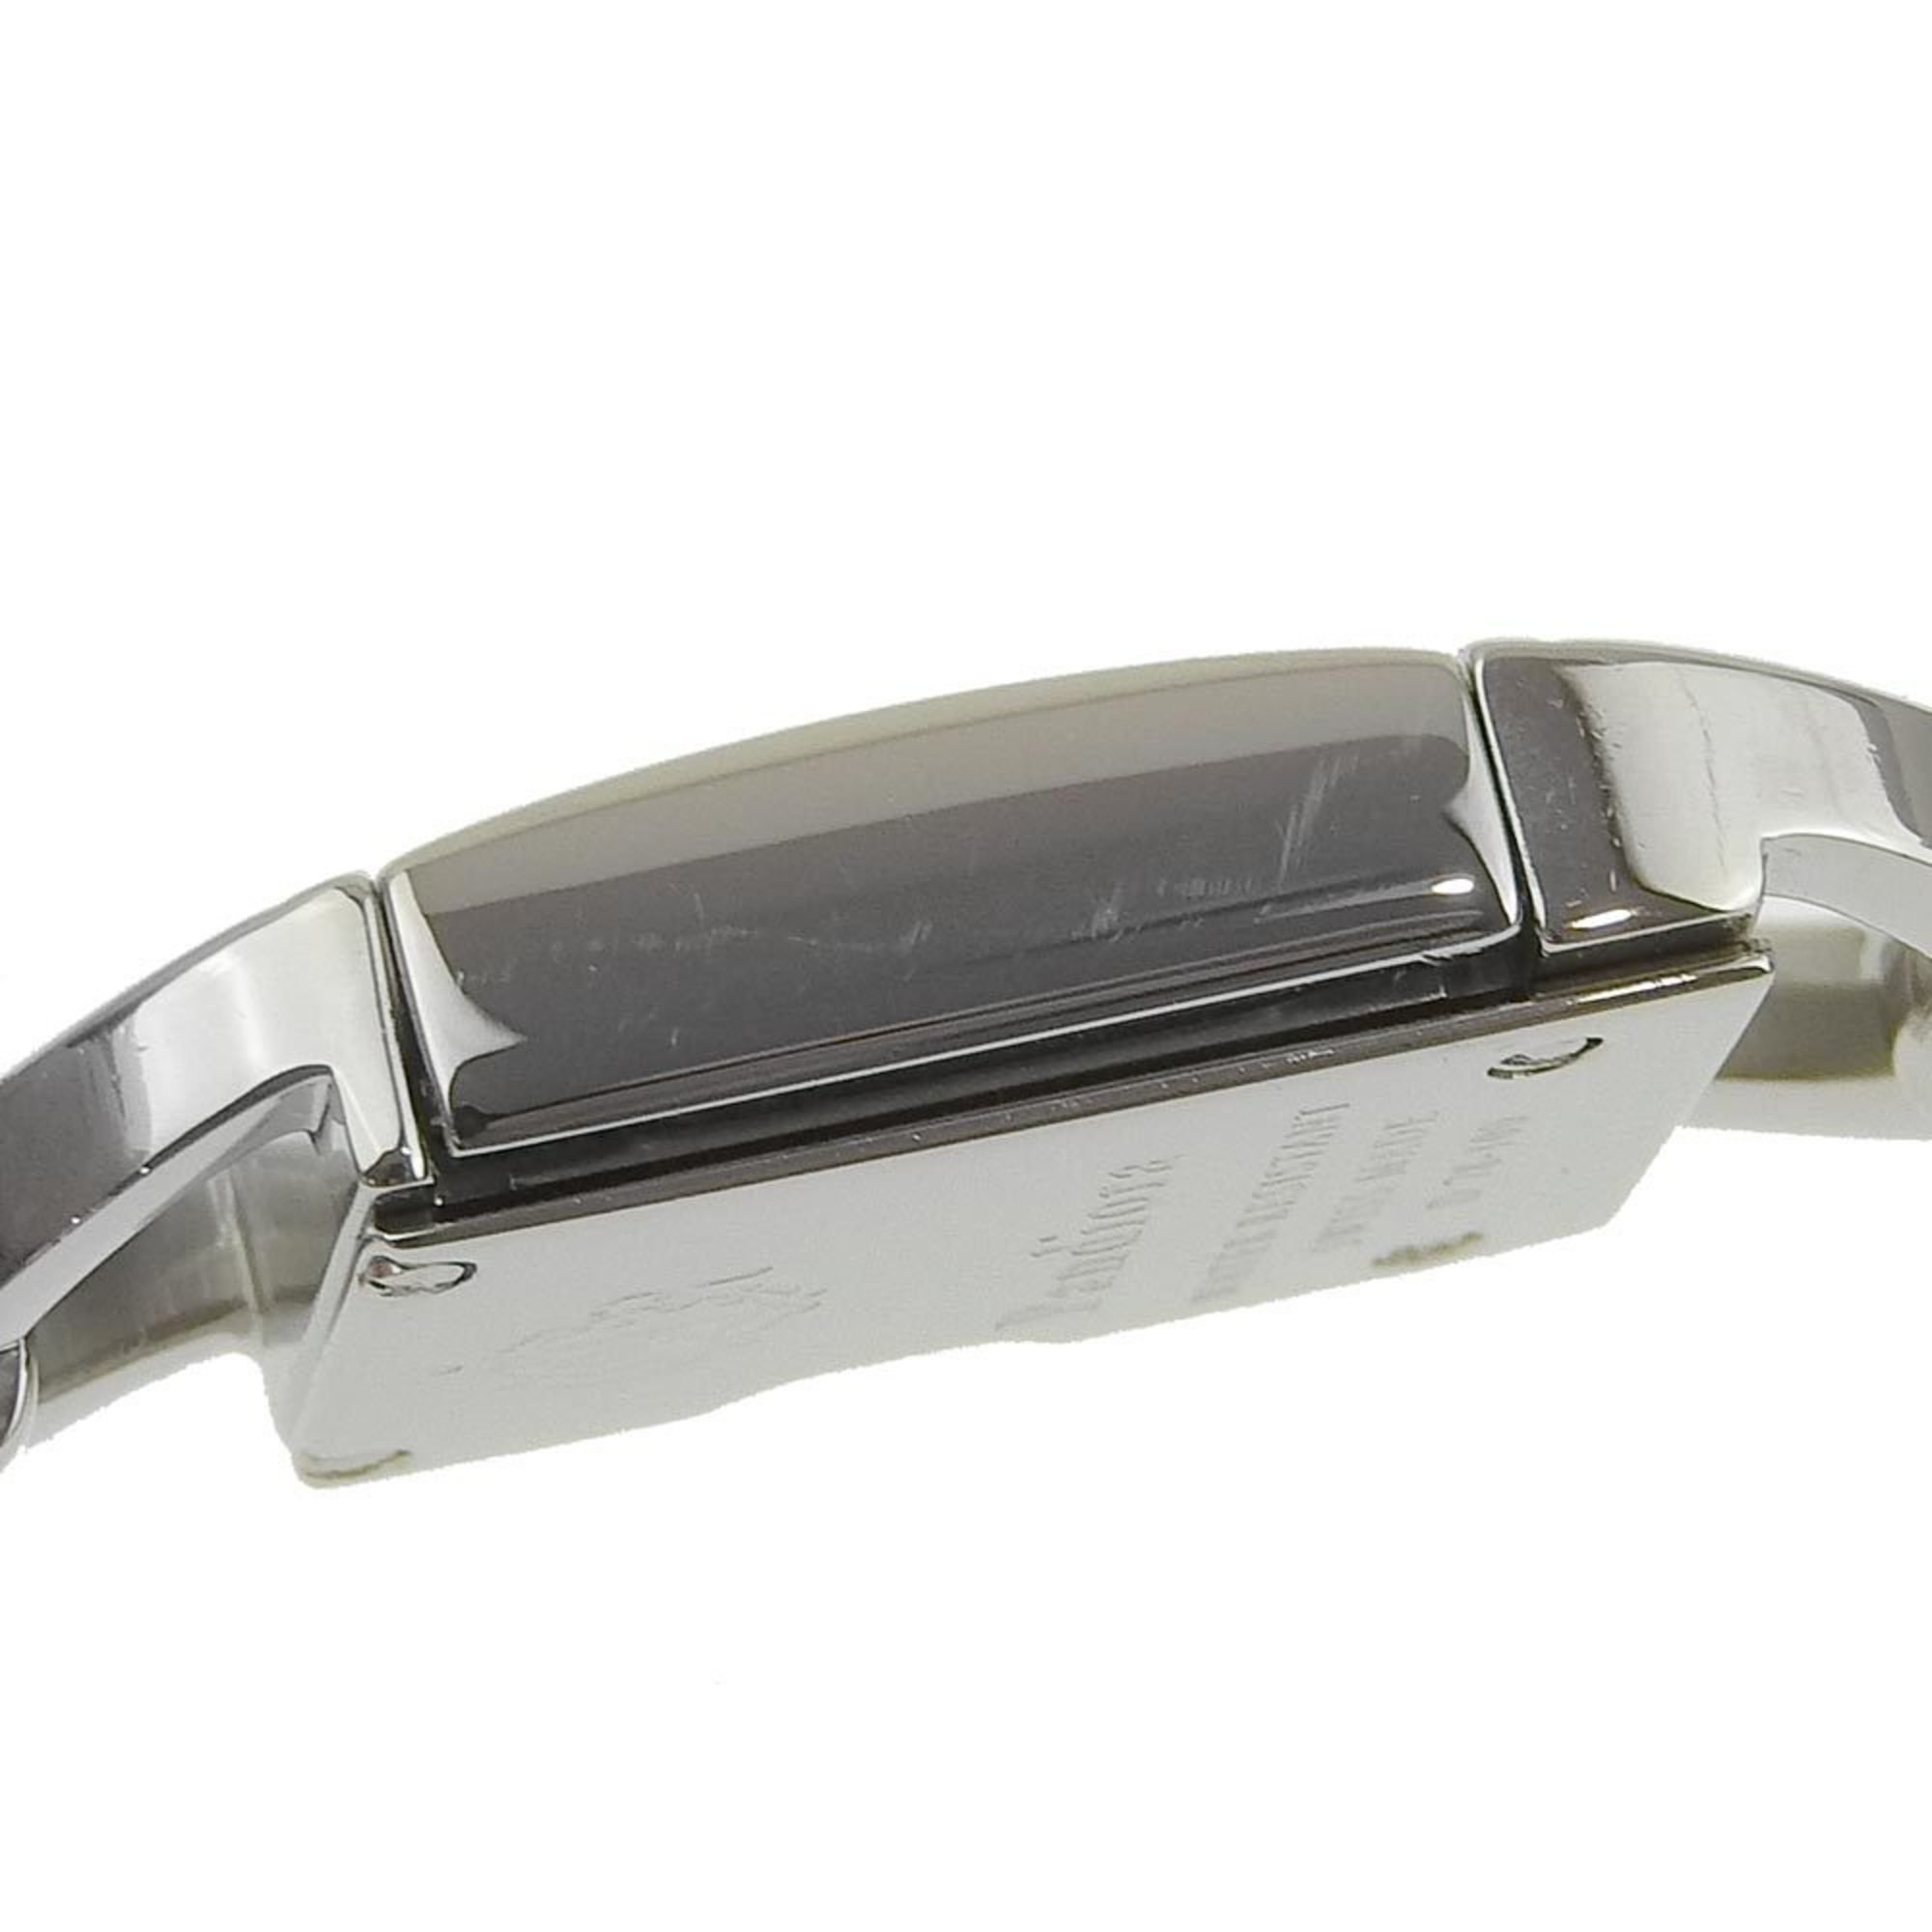 Christian Dior Pandiola Watch D78-100 Stainless Steel Quartz Silver Dial Women's